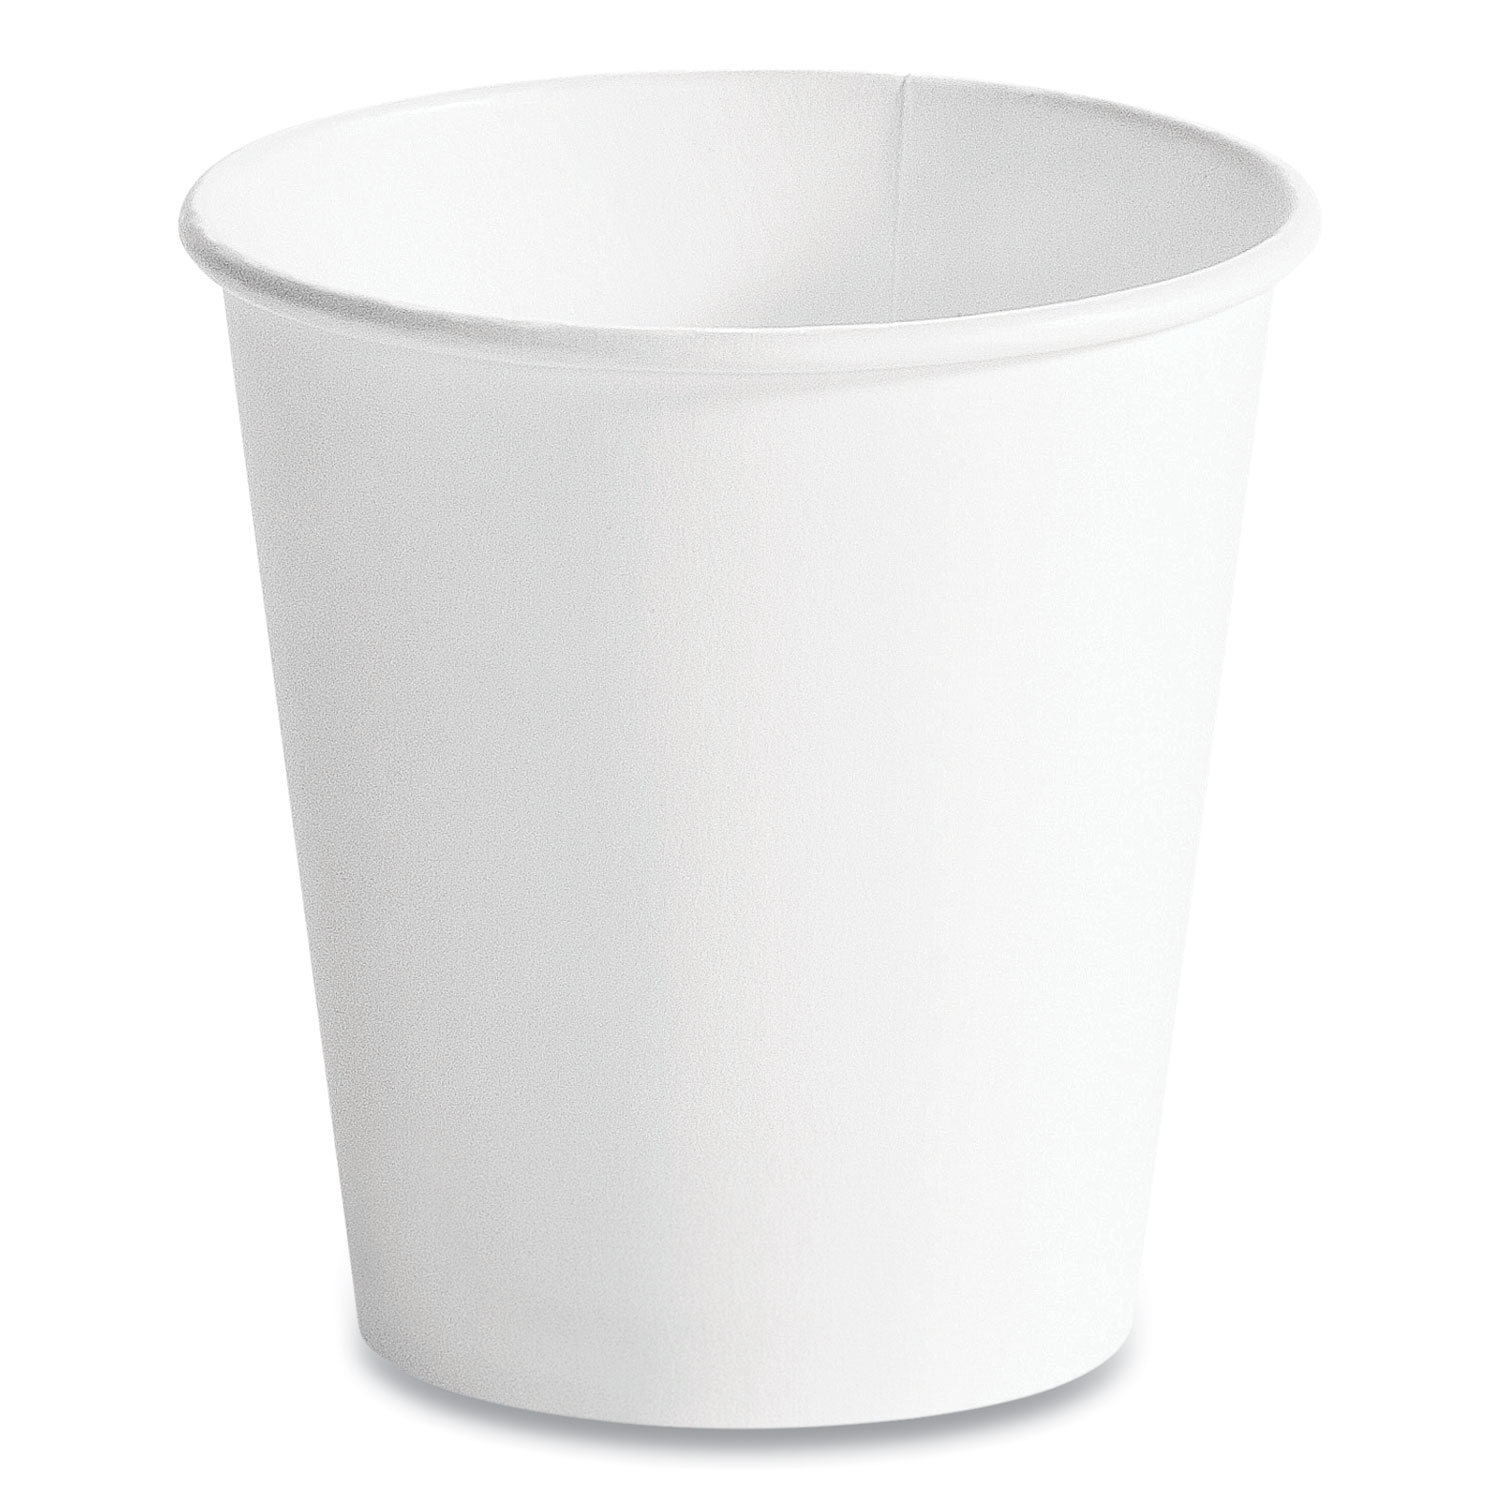  Huhtamaki 62901 Single Wall Hot Cups, 10 oz, White, 1,000/Carton (HUH62901) 